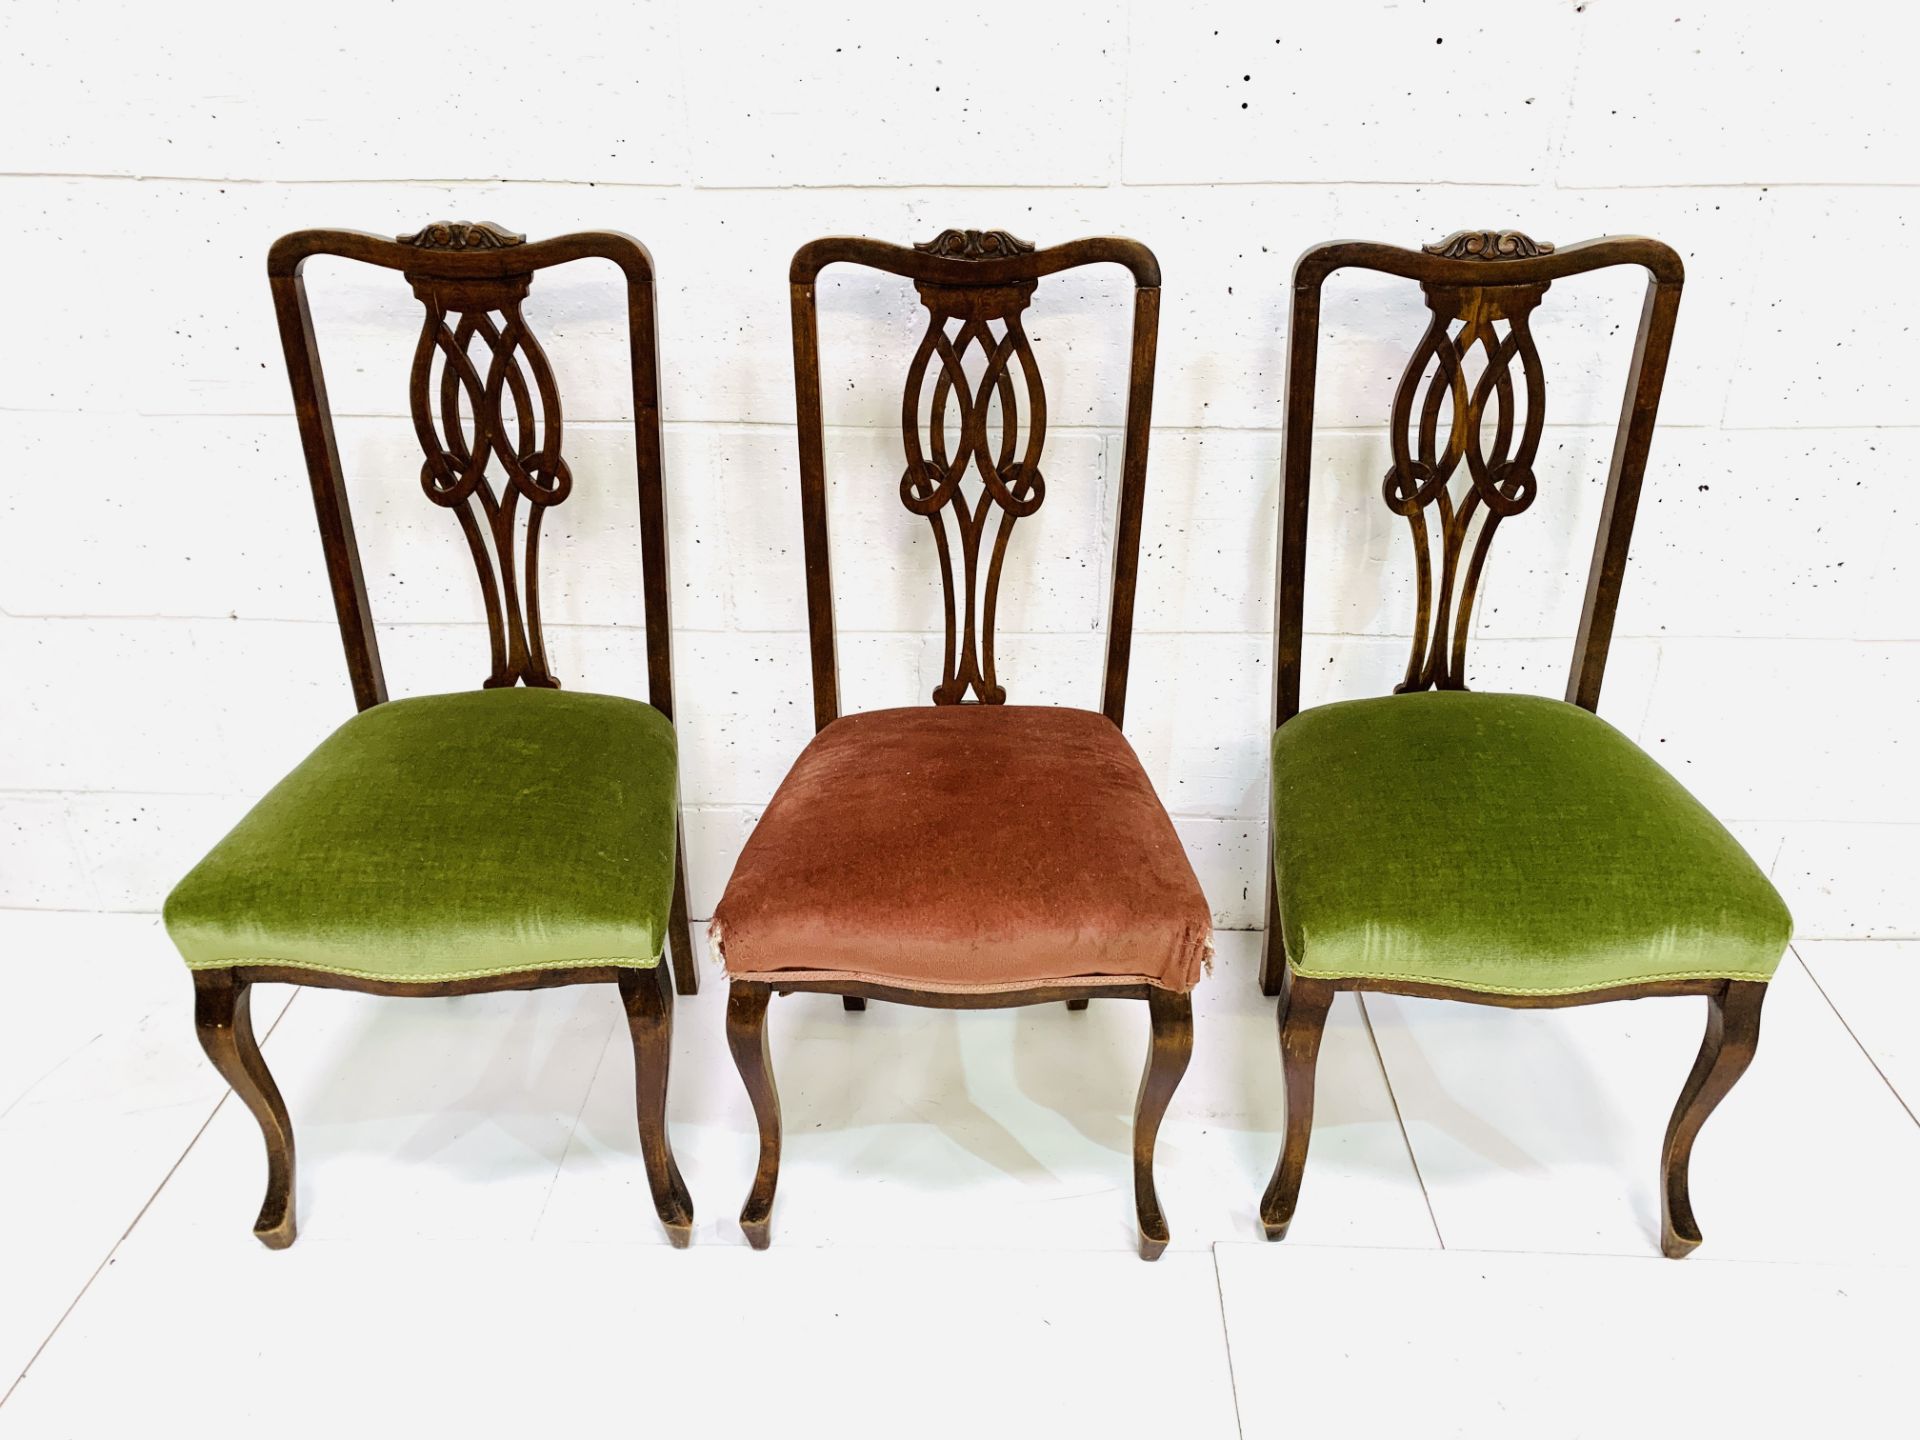 Three Georgian style mahogany dining chairs - Image 5 of 5